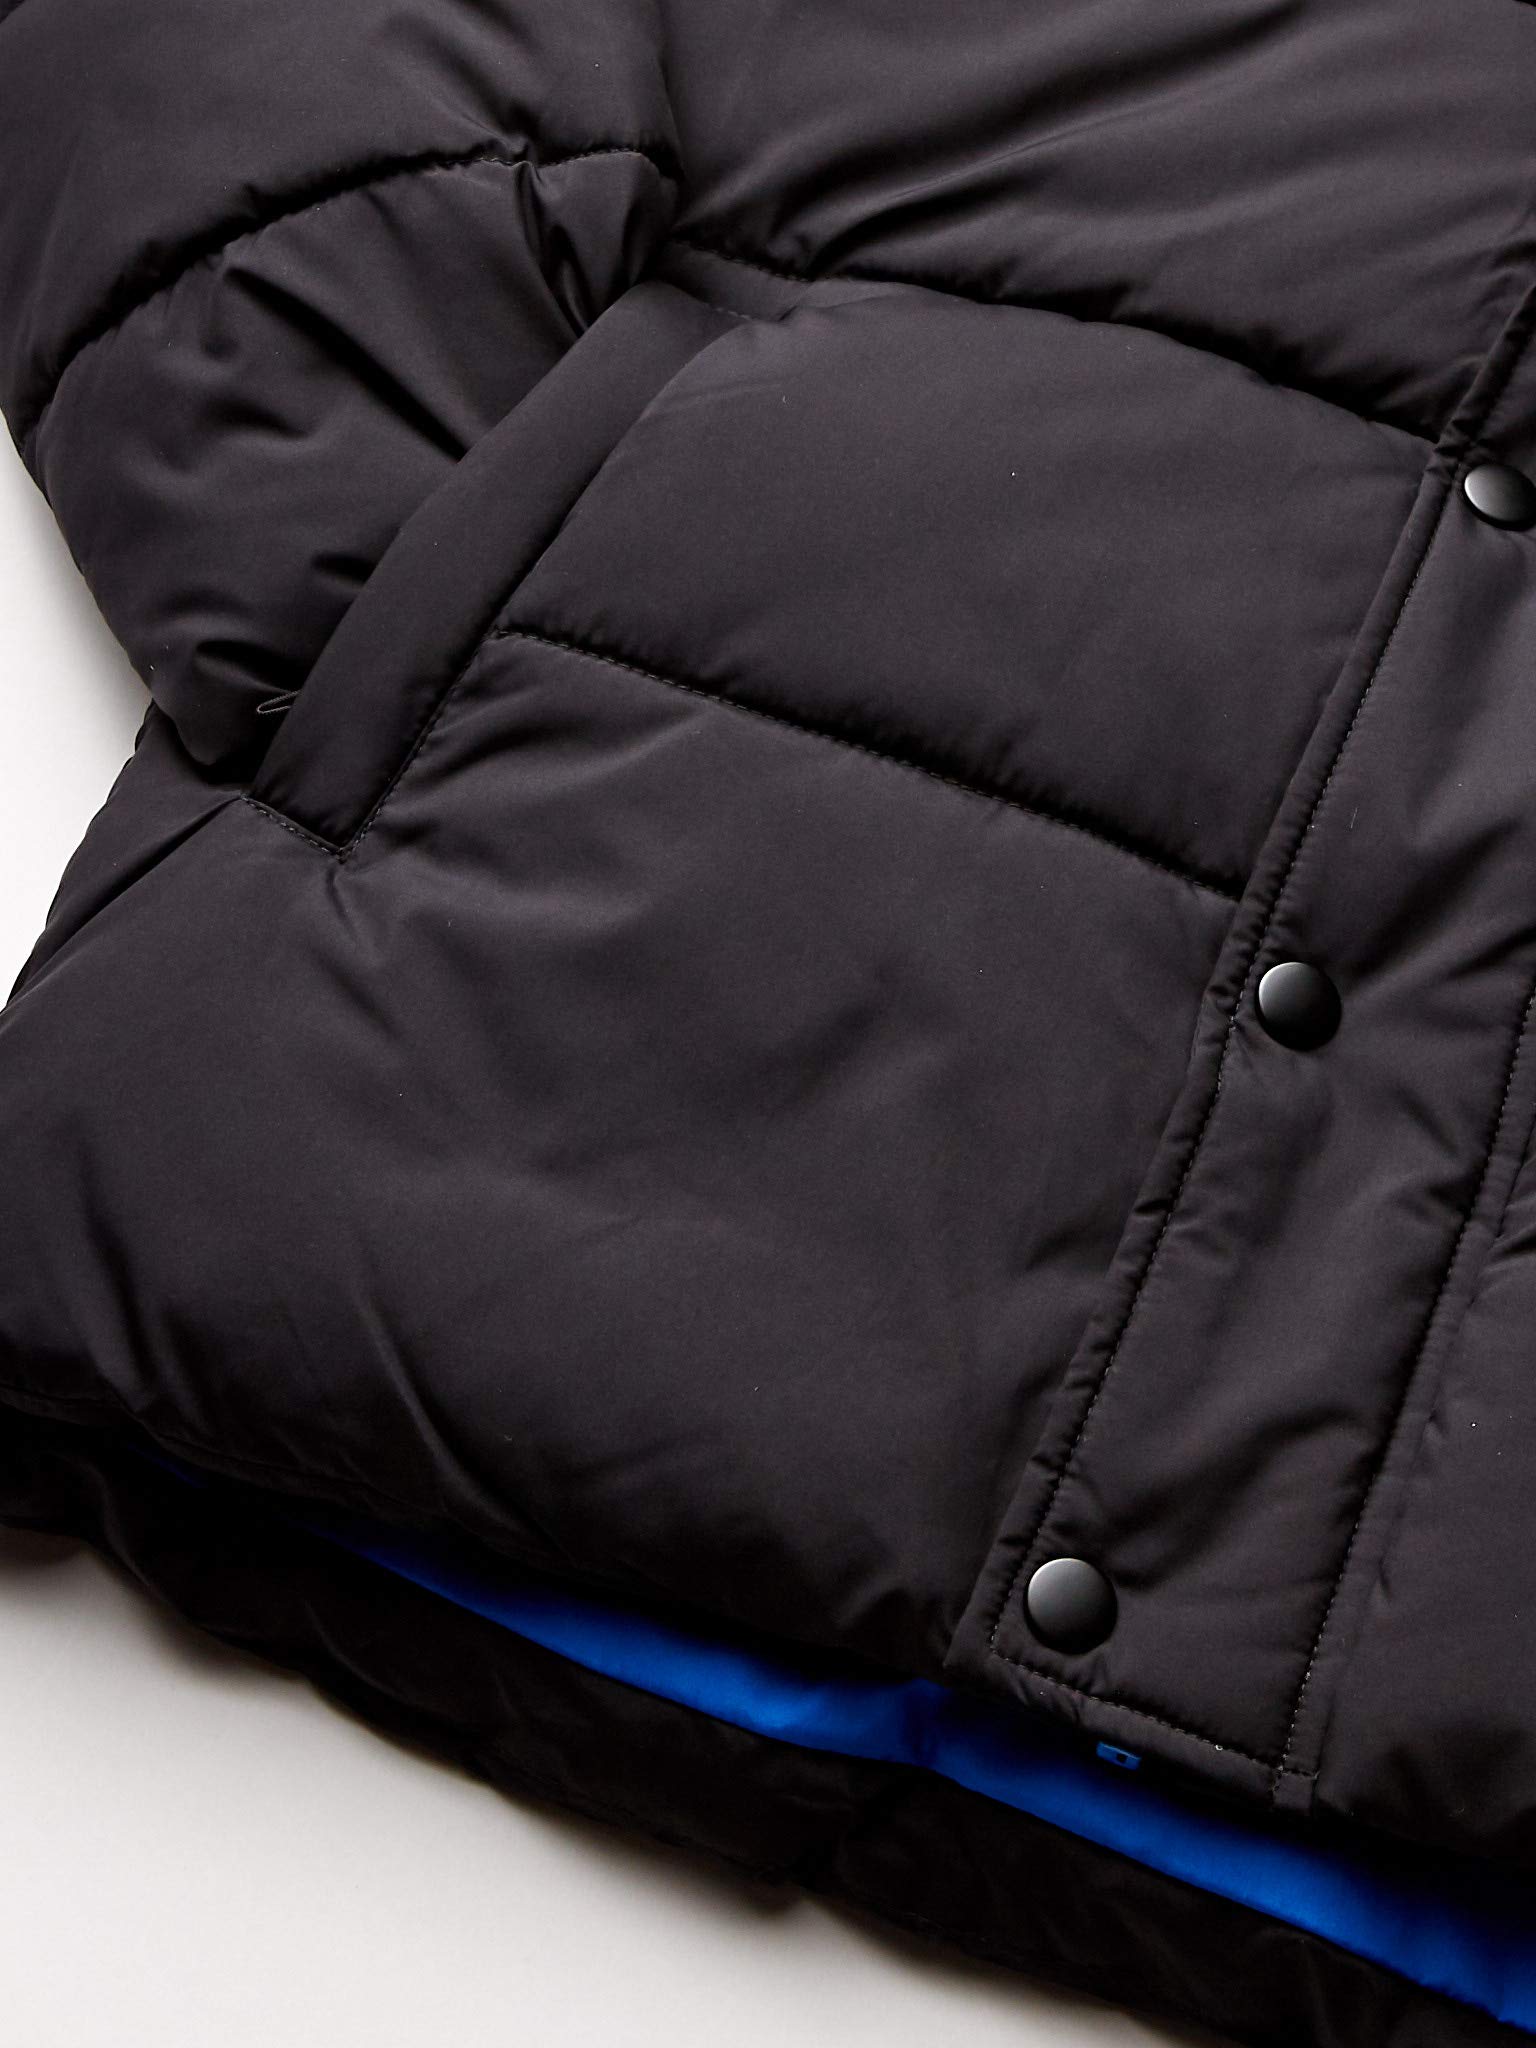 Amazon Essentials Heavyweight Hooded Puffer Jacket